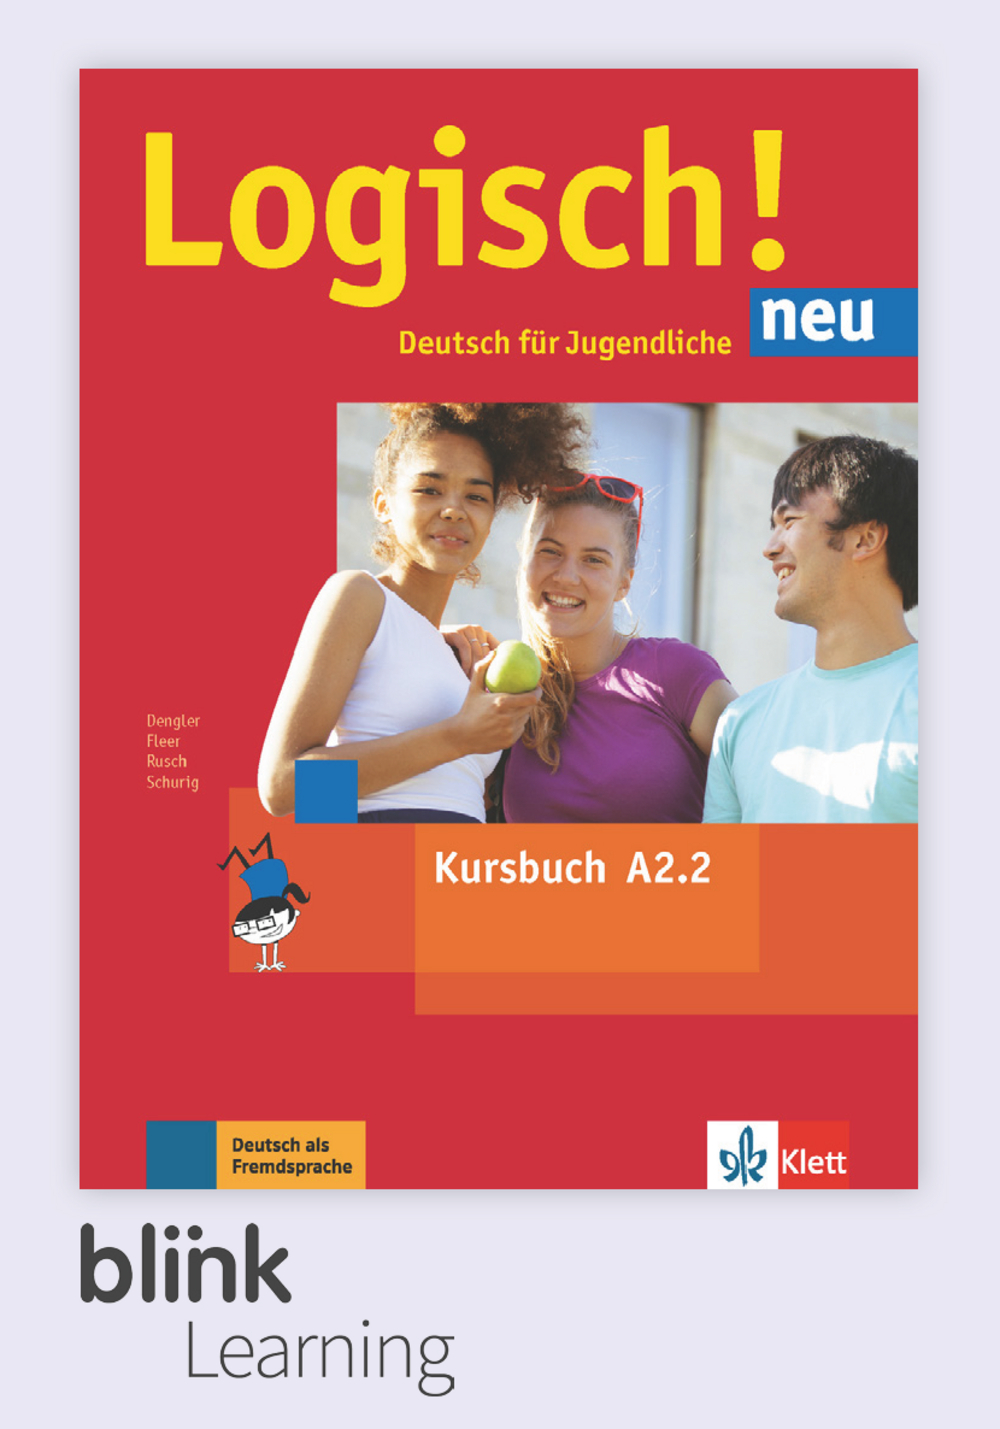 Logisch! NEU A2.2 Digital Kursbuch für Lernende / Цифровой учебник для ученика